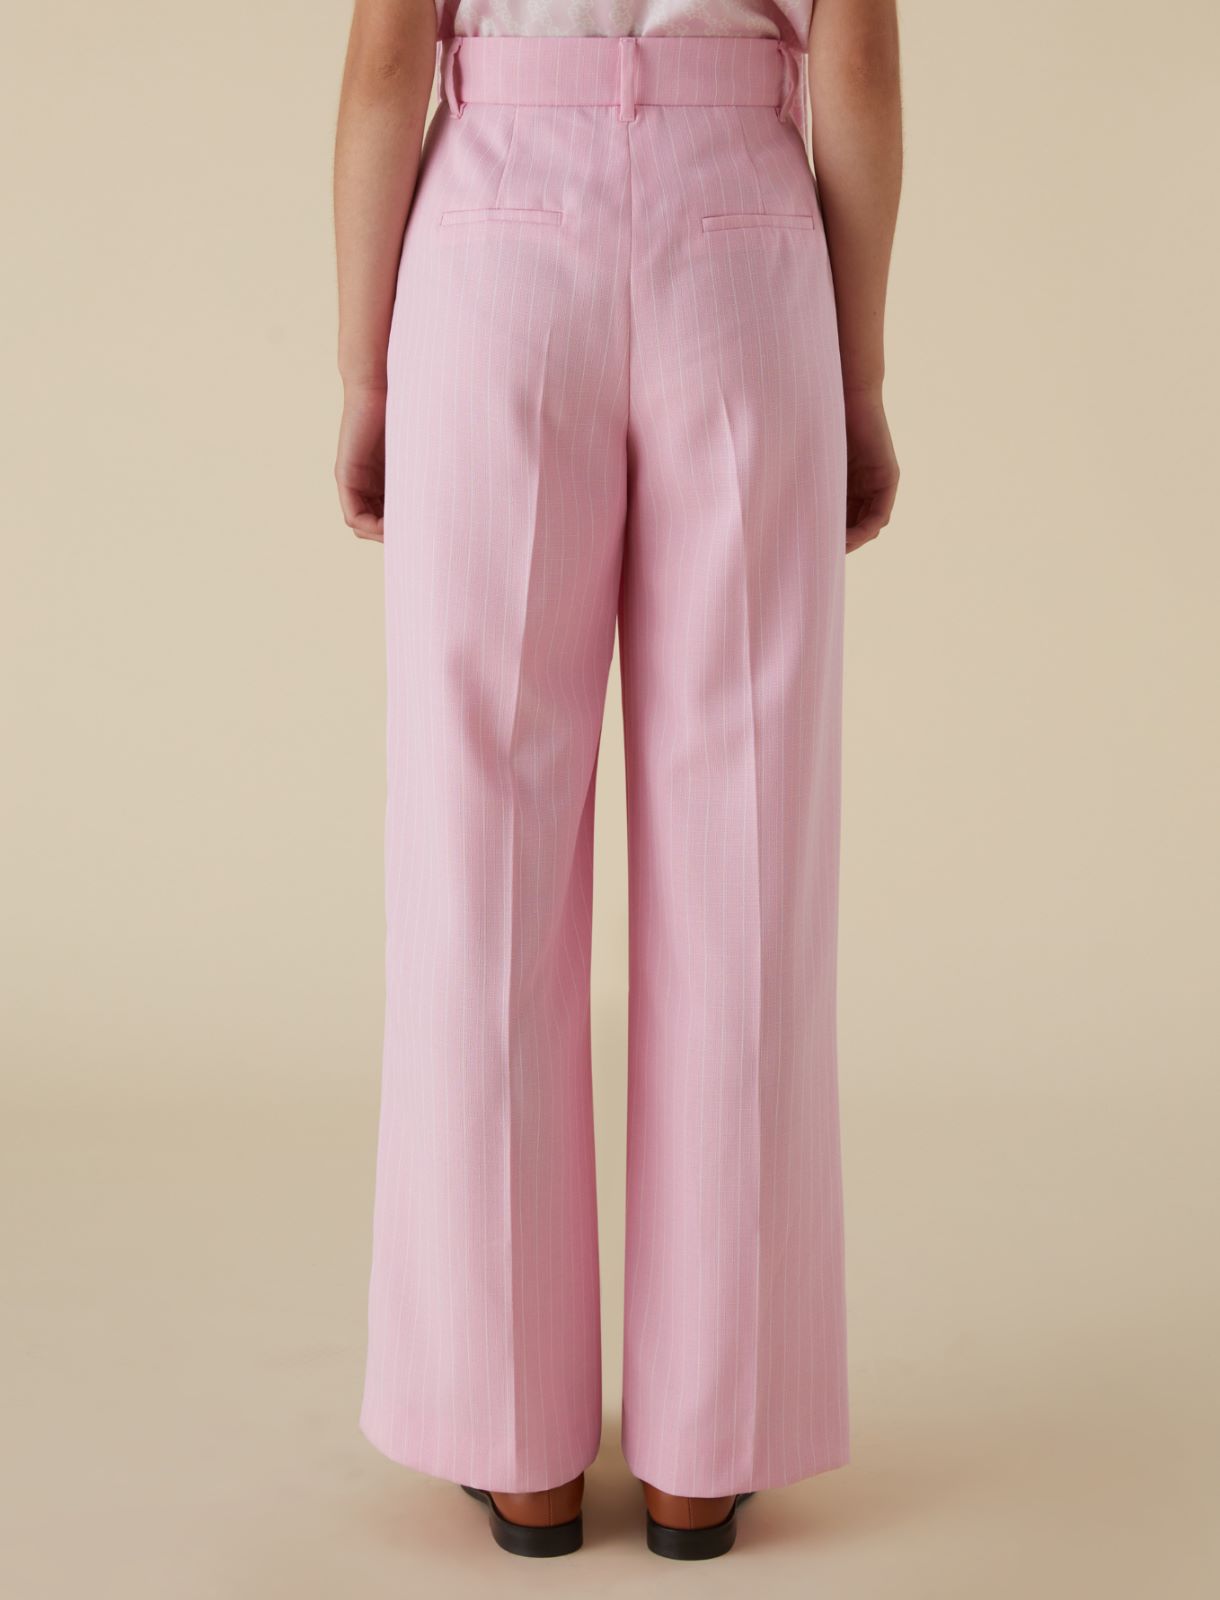 Pantalon à rayures tennis - Rose pastel - Marella - 2